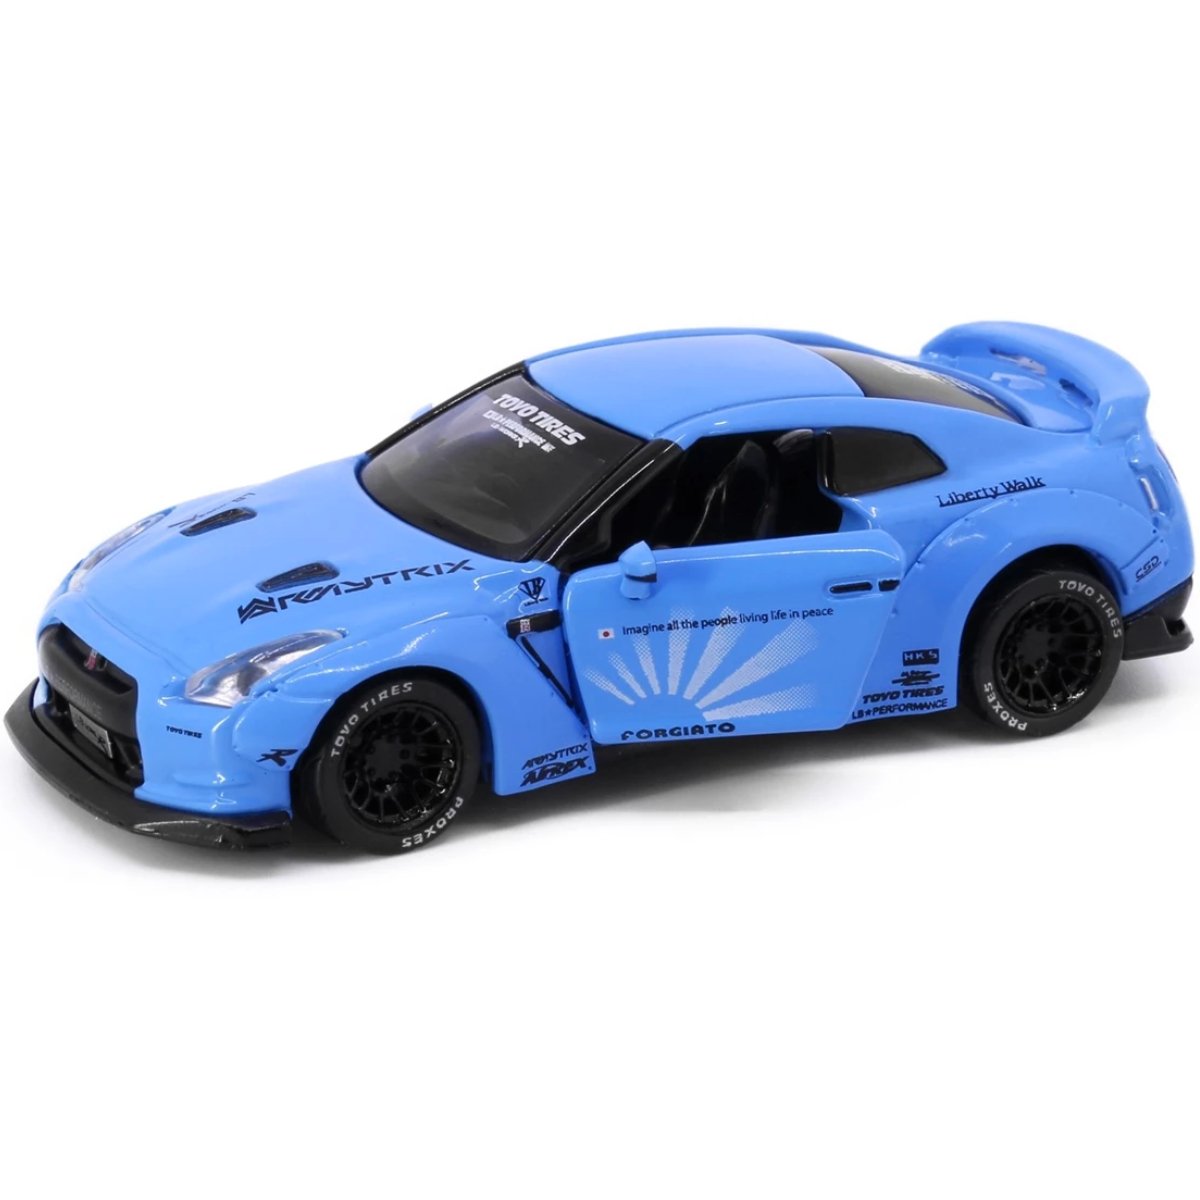 Tiny Models Nissan GTR Blue (1:64 Scale) - Phillips Hobbies